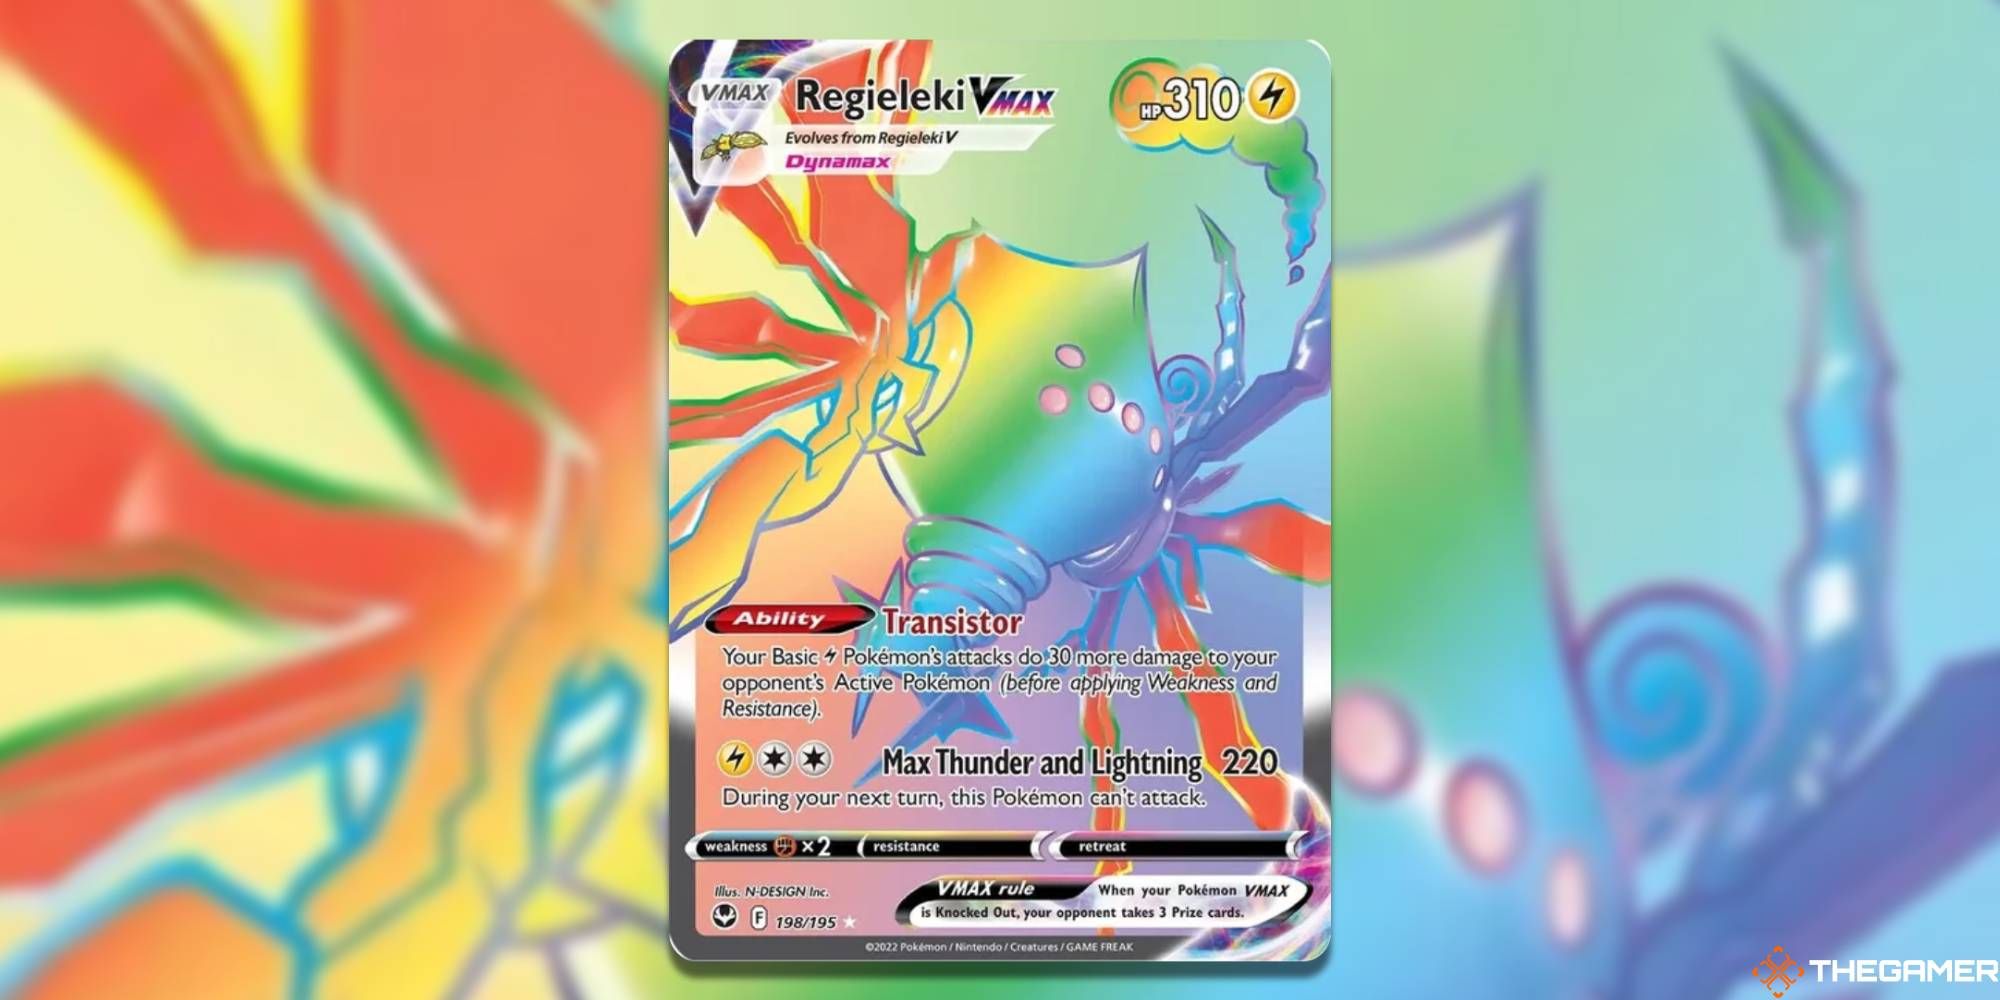 Regieleki VMAX Rainbow Rare from Pokemon TCG with a blurred background